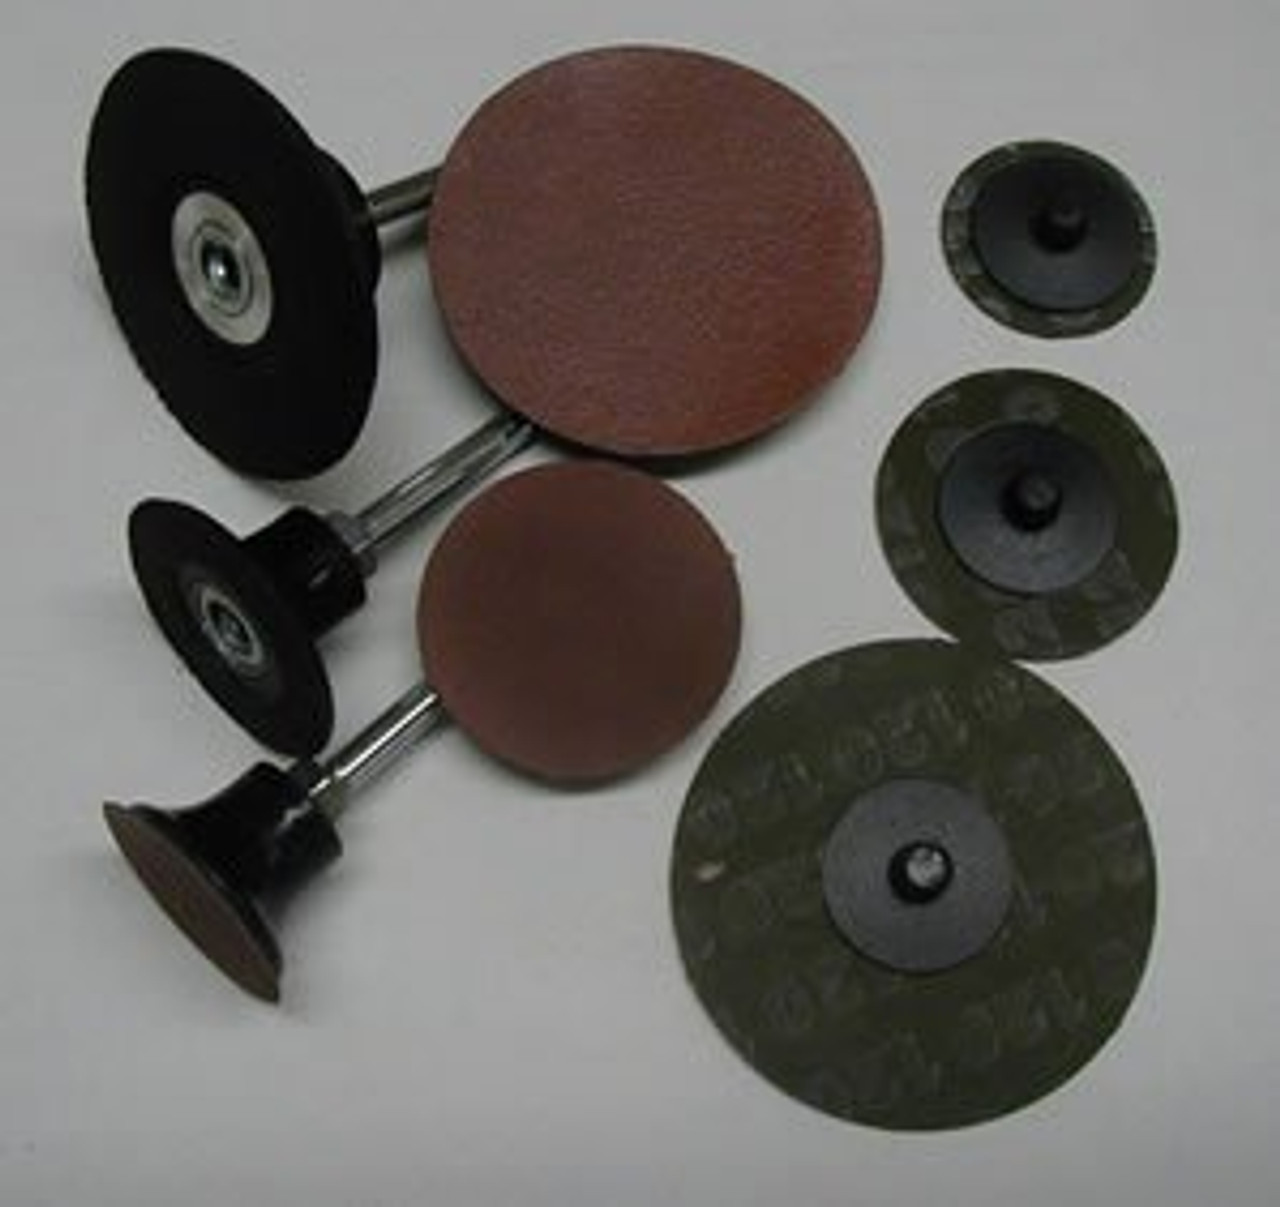 Aluminum Oxide Sanding Disk 3" - 24 Grit